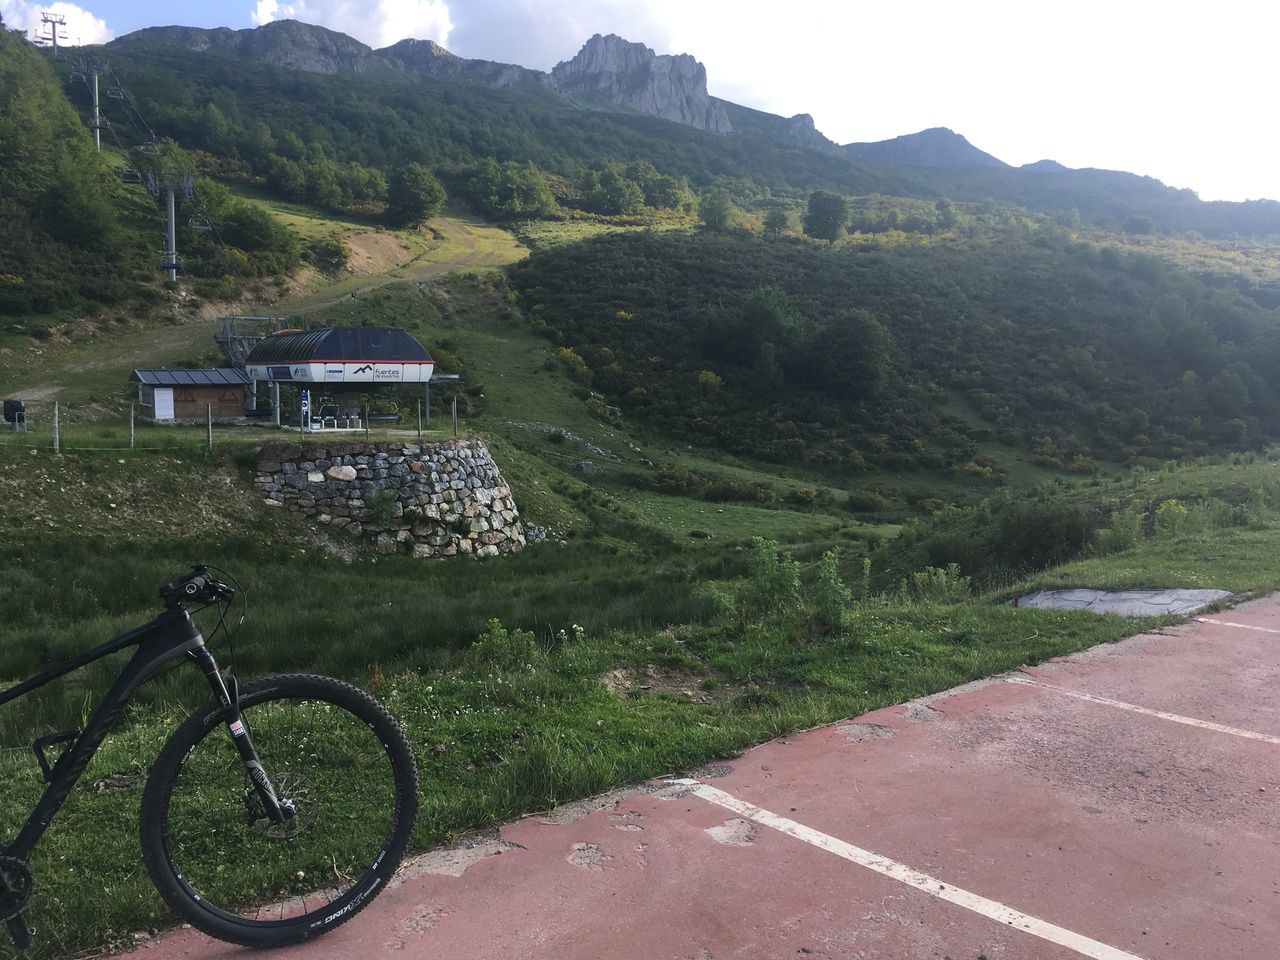 Pretemporada 2 - Bicicleta de montaña por San Isidro, Fuentes de Invierno y  alrededores - Nevanorte - Nevasport.com